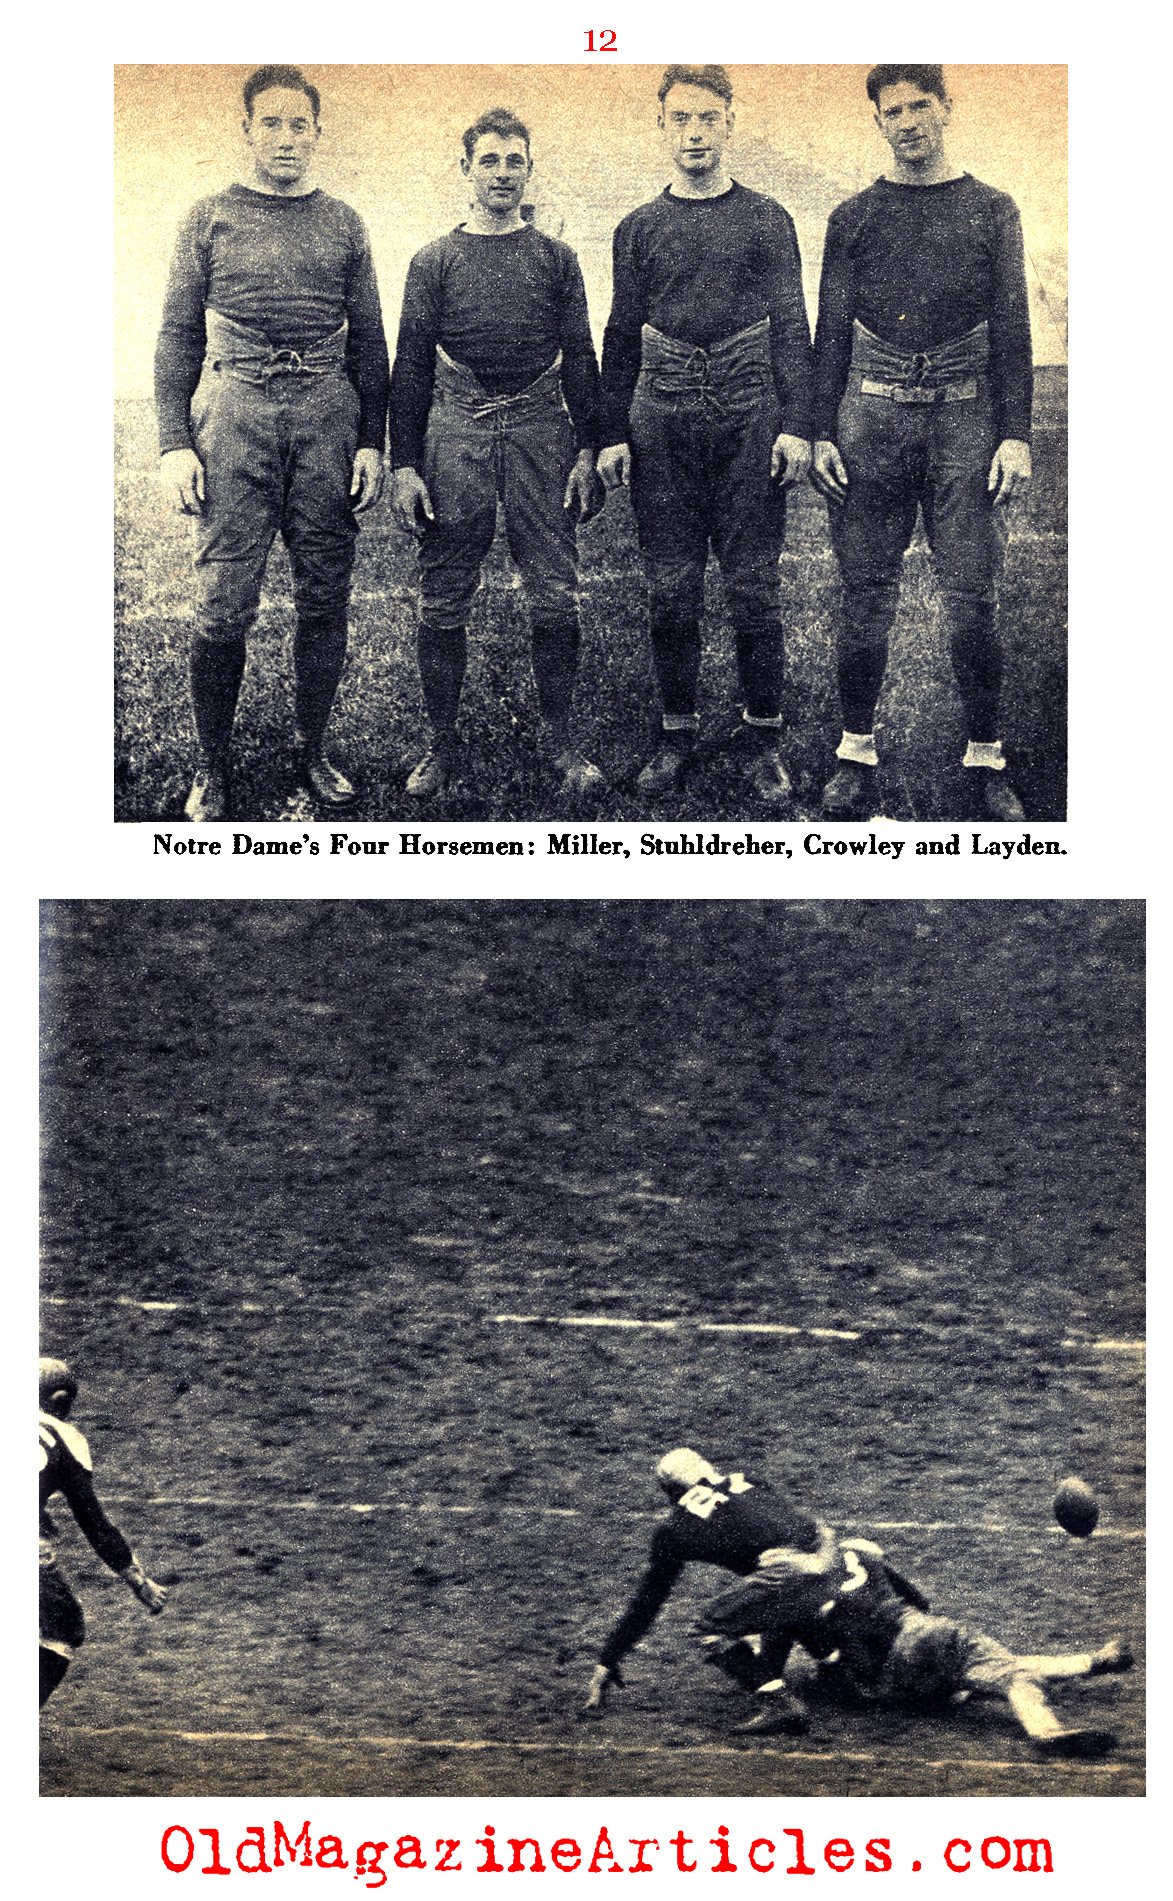 Football's First Half-Century (Coronet Magazine, 1953)